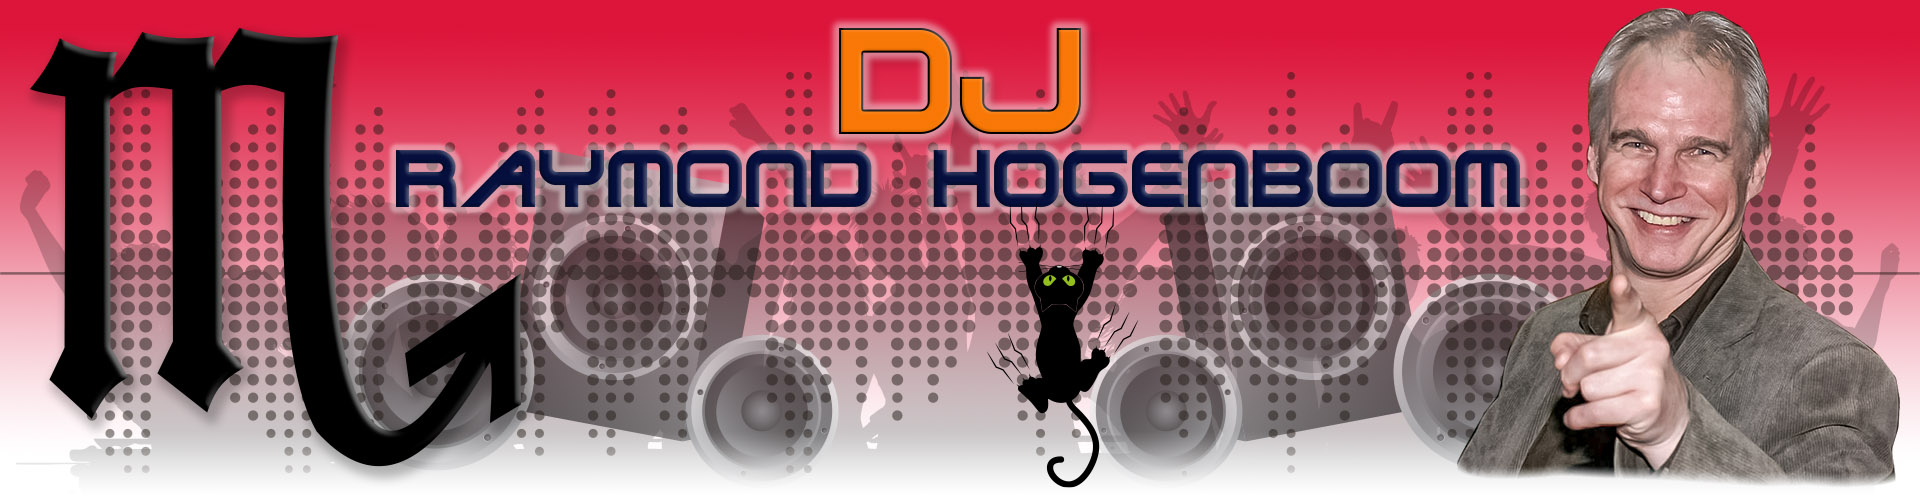 DJ Raymond Hogenboom